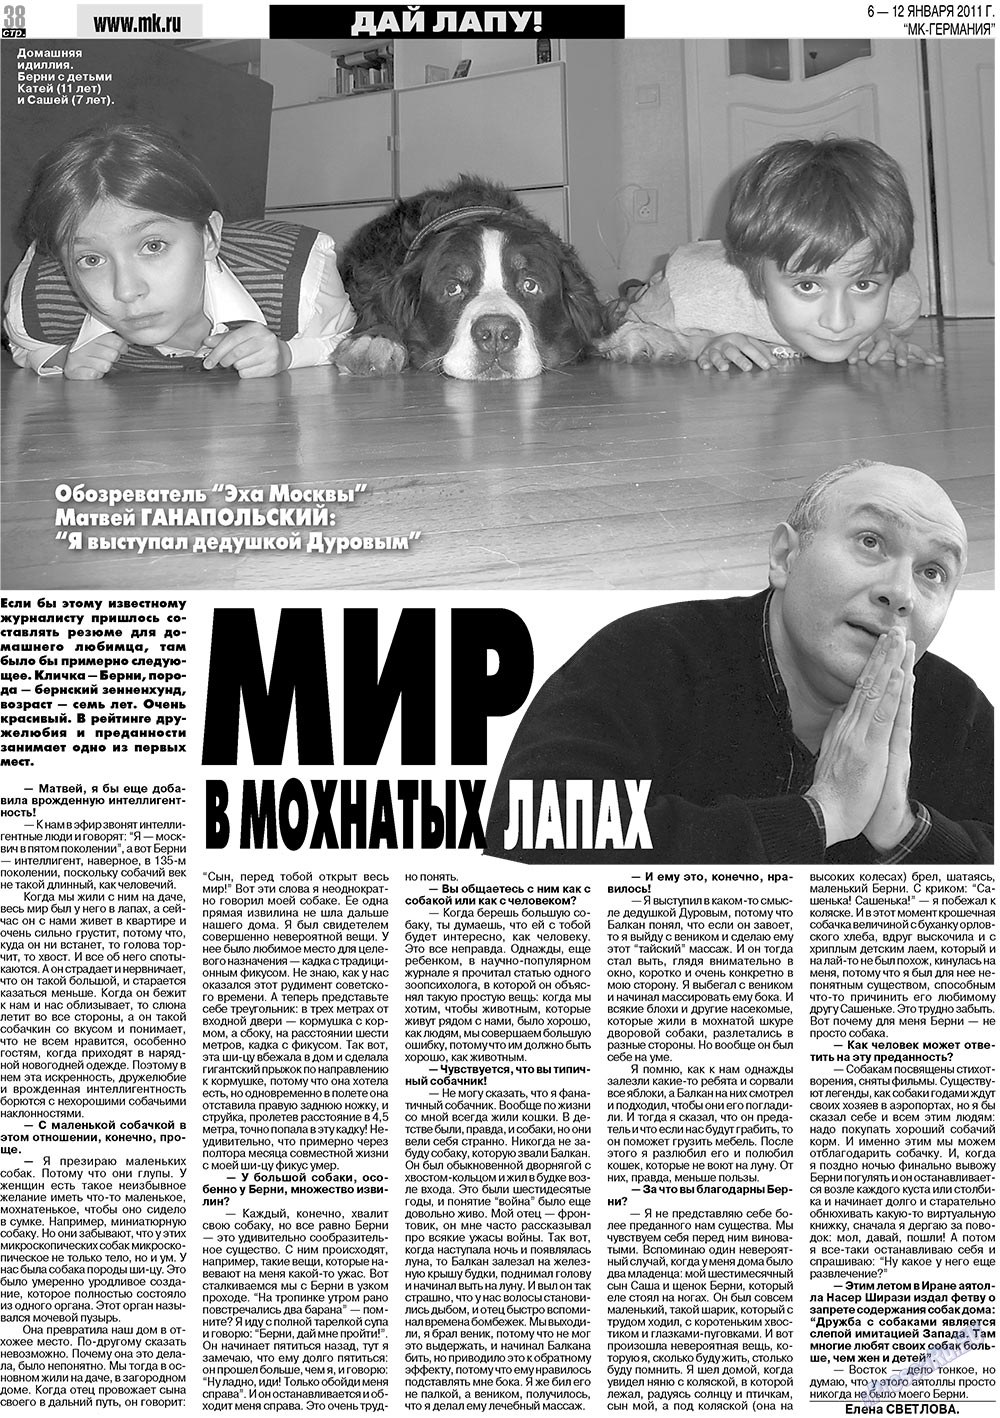 МК-Германия, газета. 2011 №1 стр.38